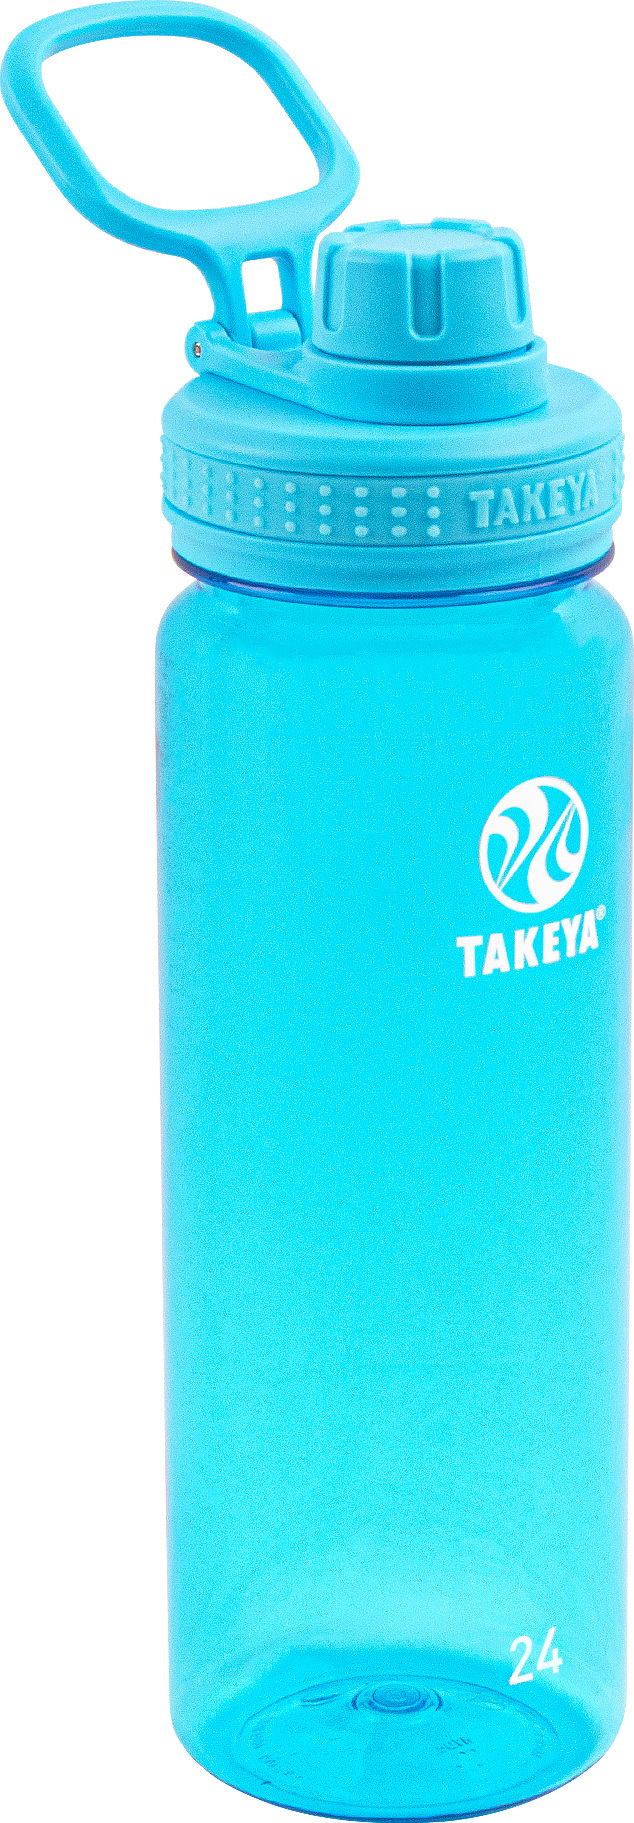 Takeya Tritan Bottle 700 ml Breeze Blue